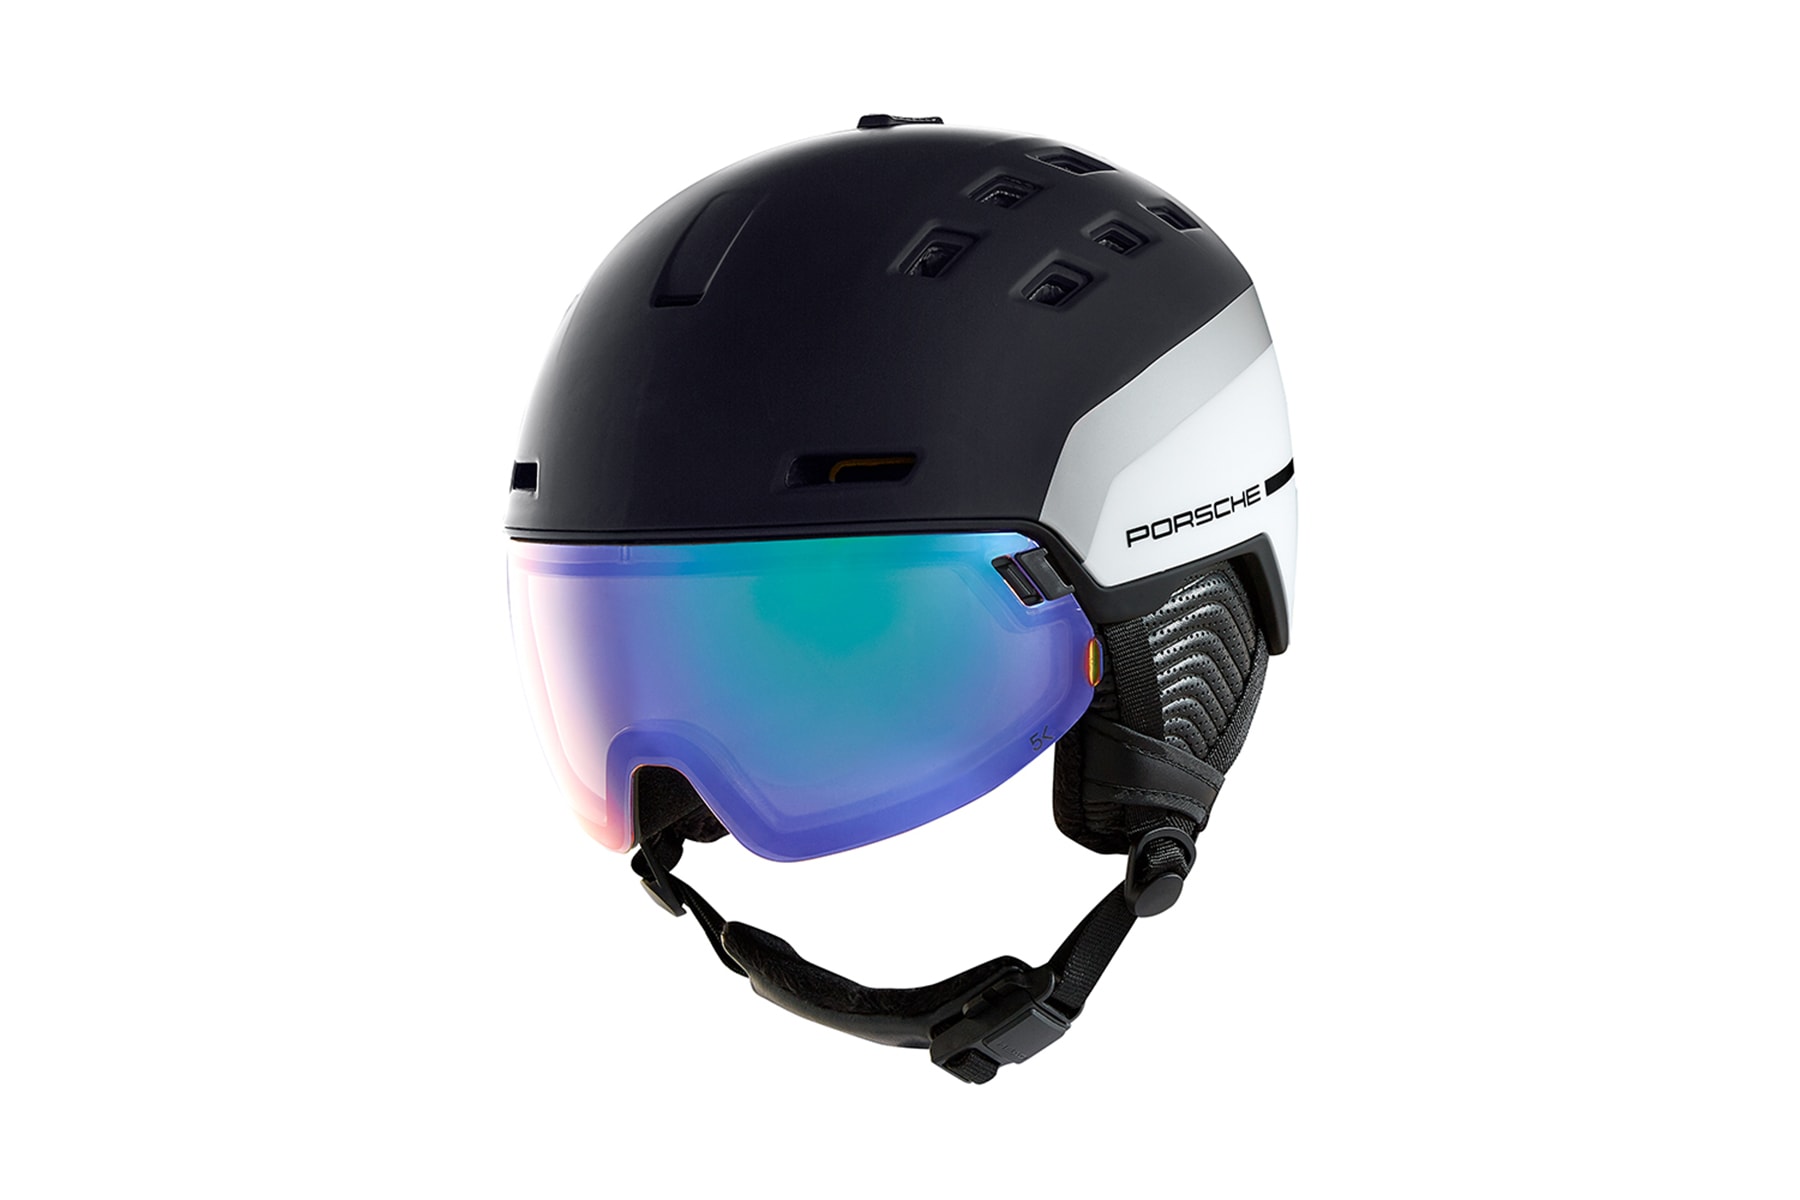 Porsche Design Head Radar ski Helmet release 